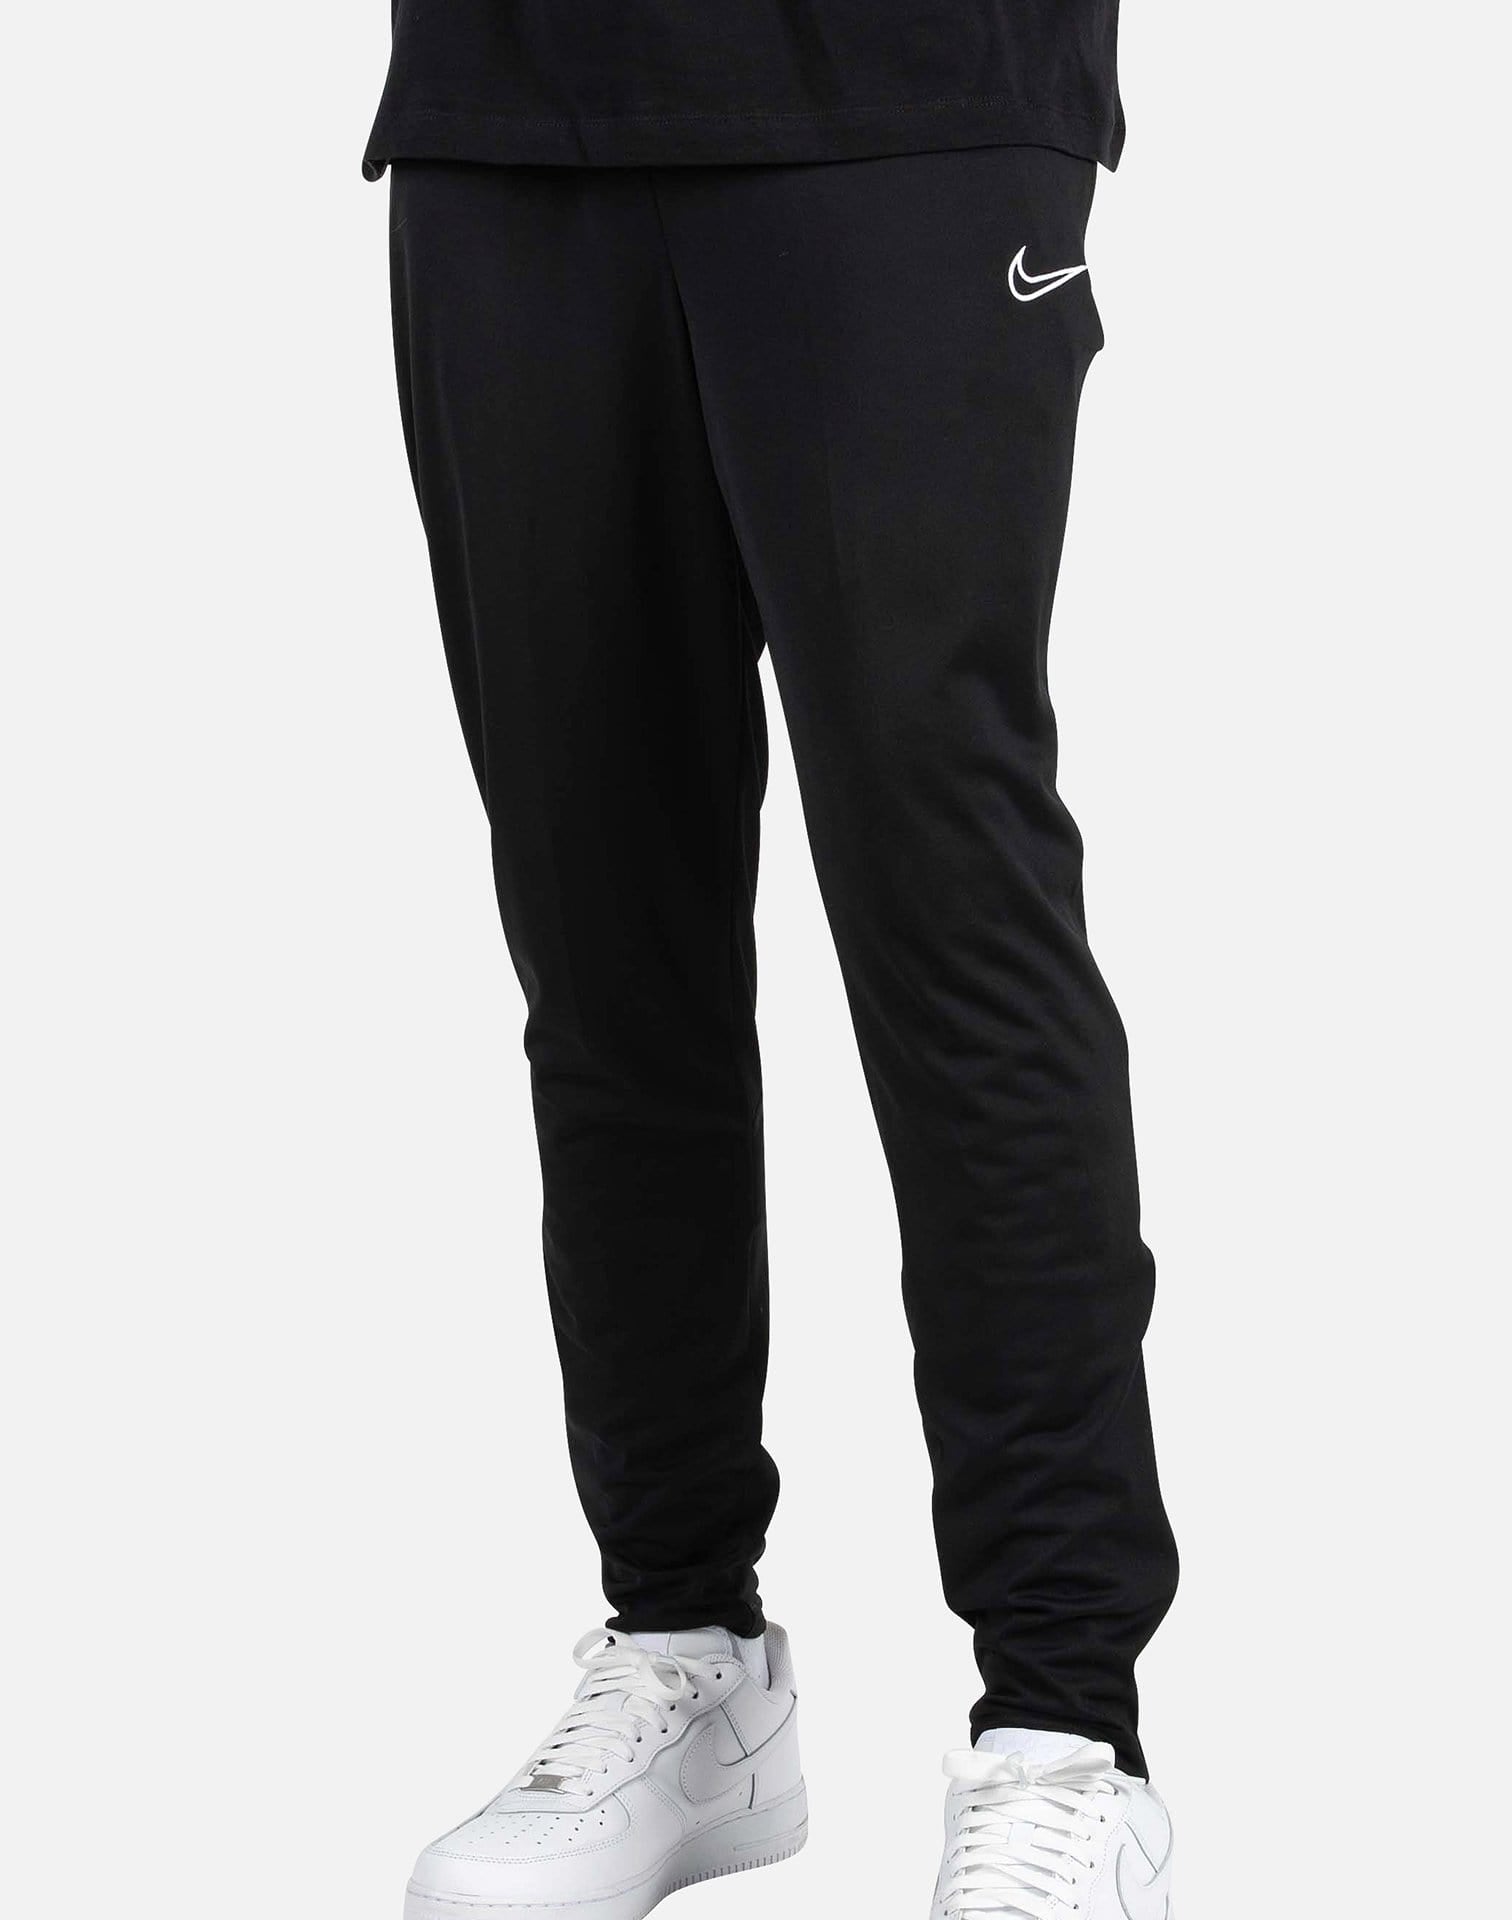 Nike Academy Men's Dri-FIT Soccer Pants.